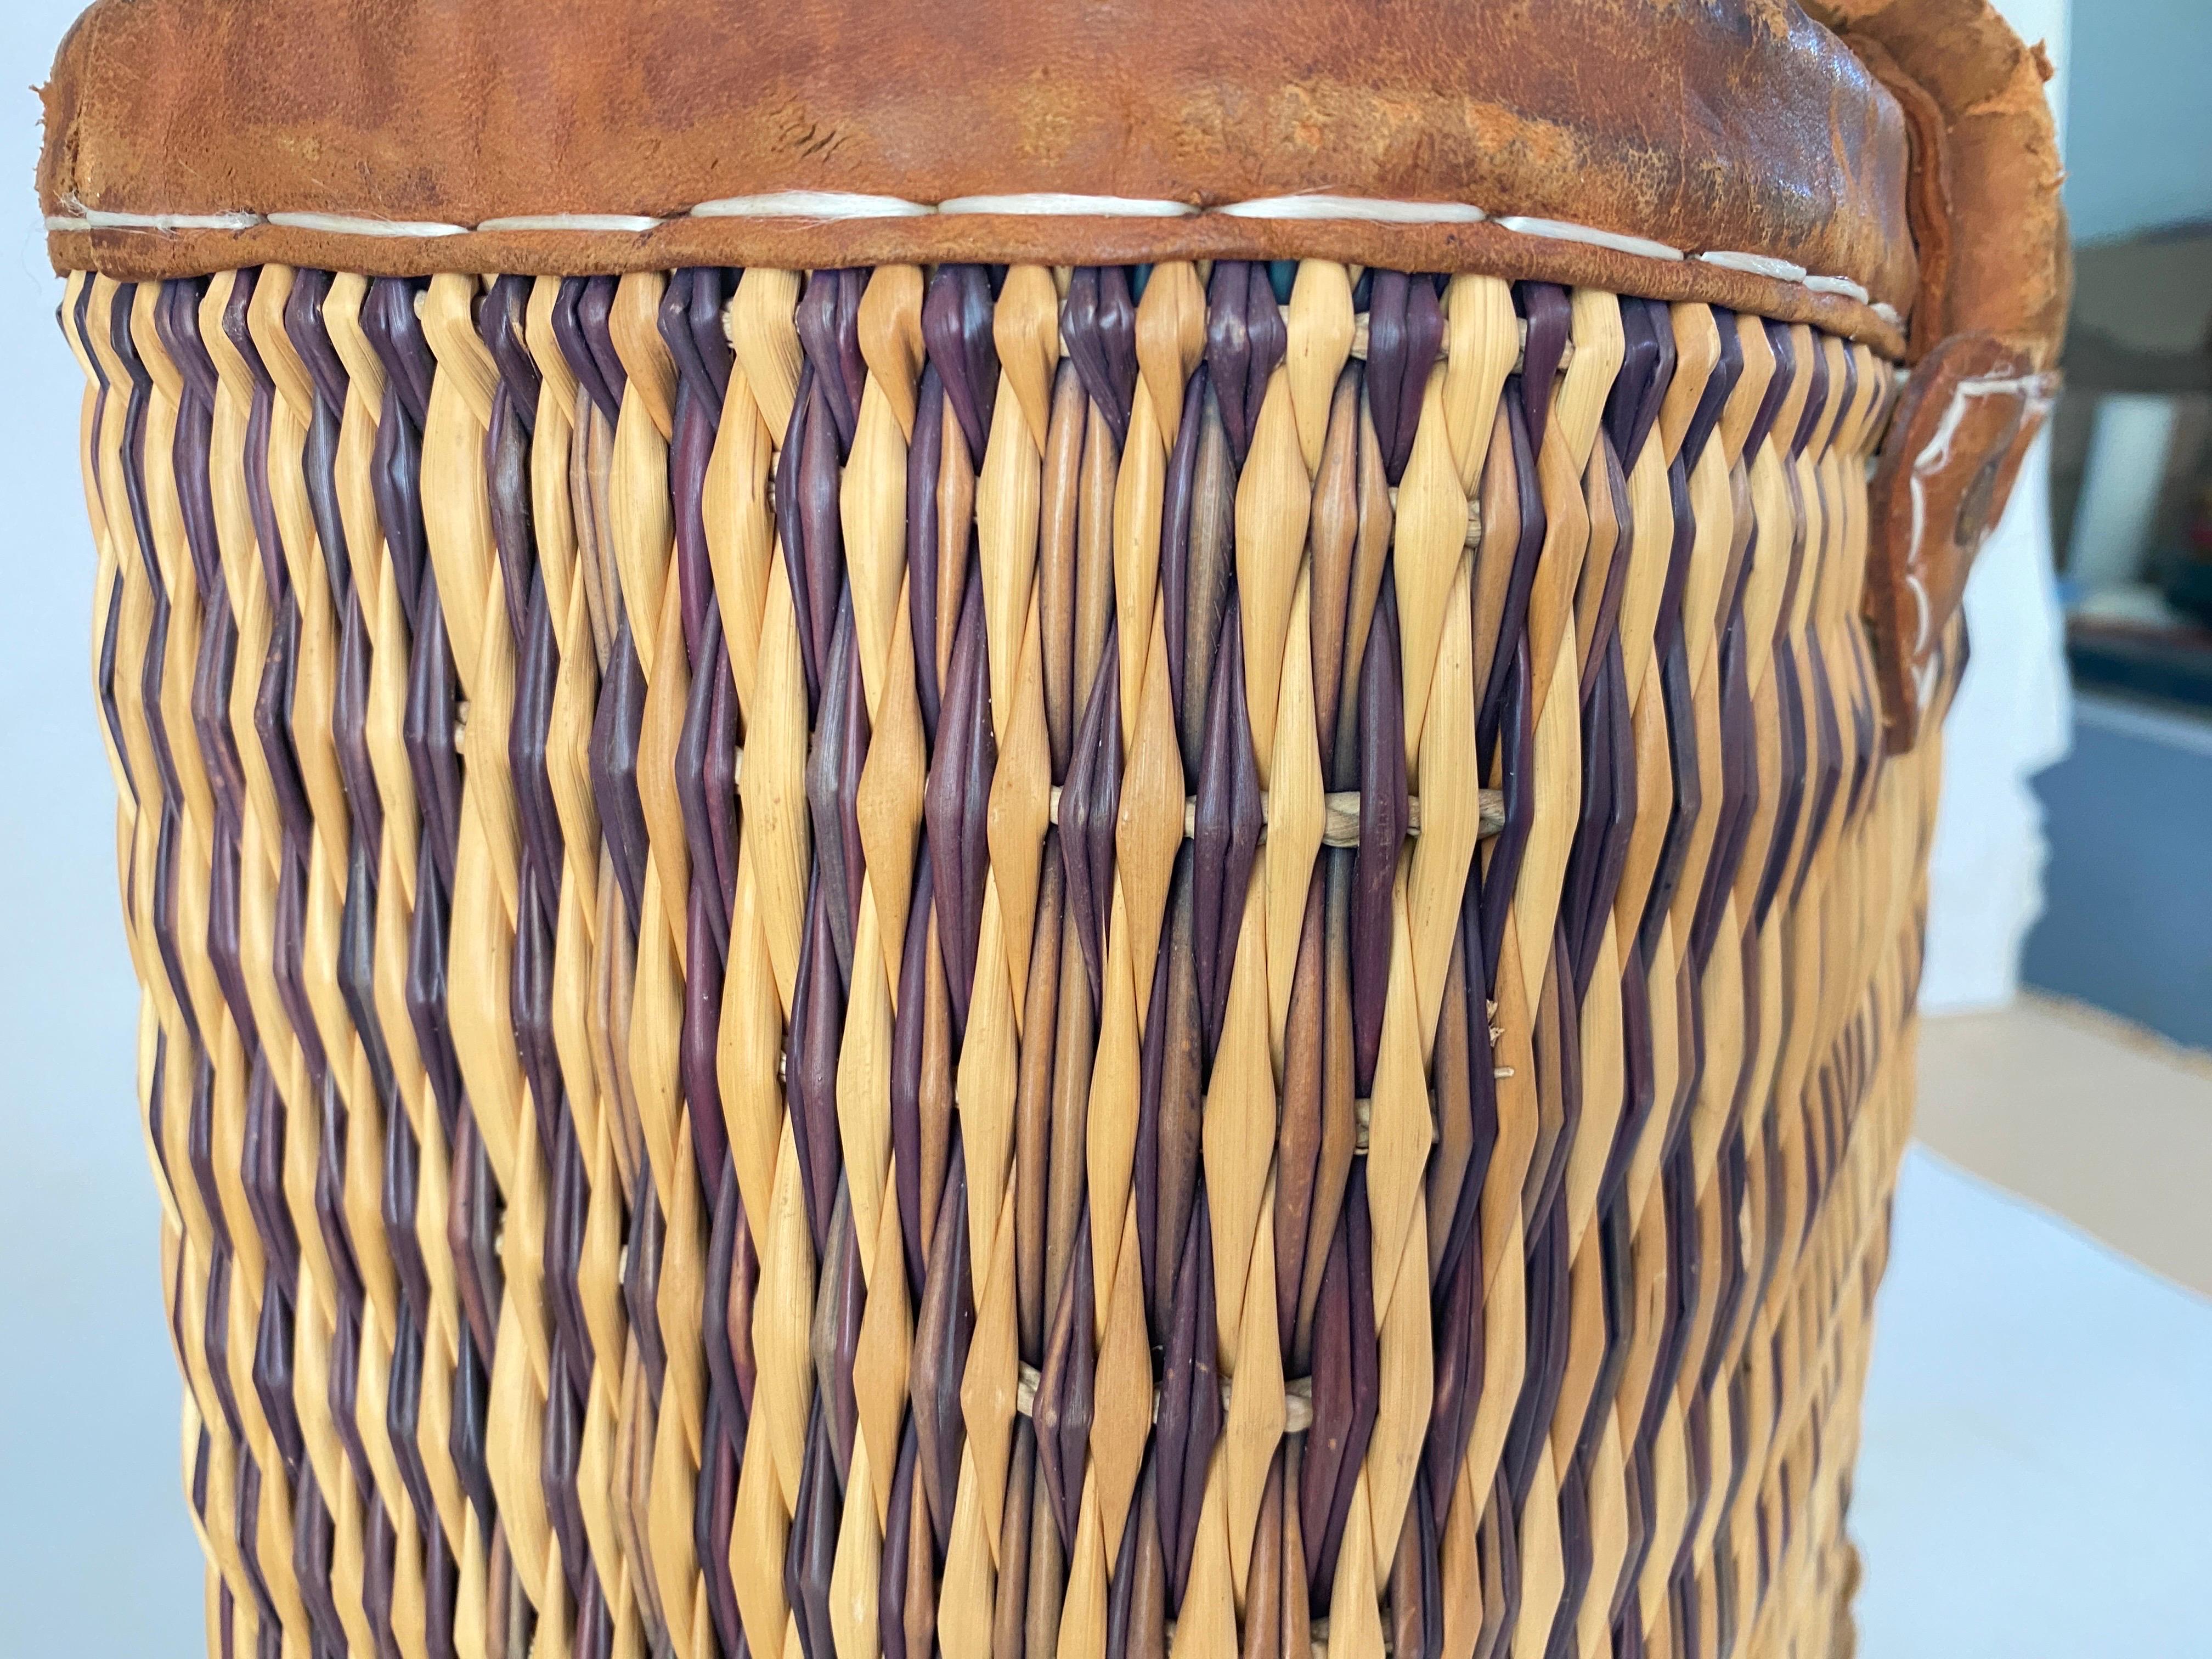 Vintage French Wicker Basket, Gold Color Stitched Leather Bag Handles France For Sale 25